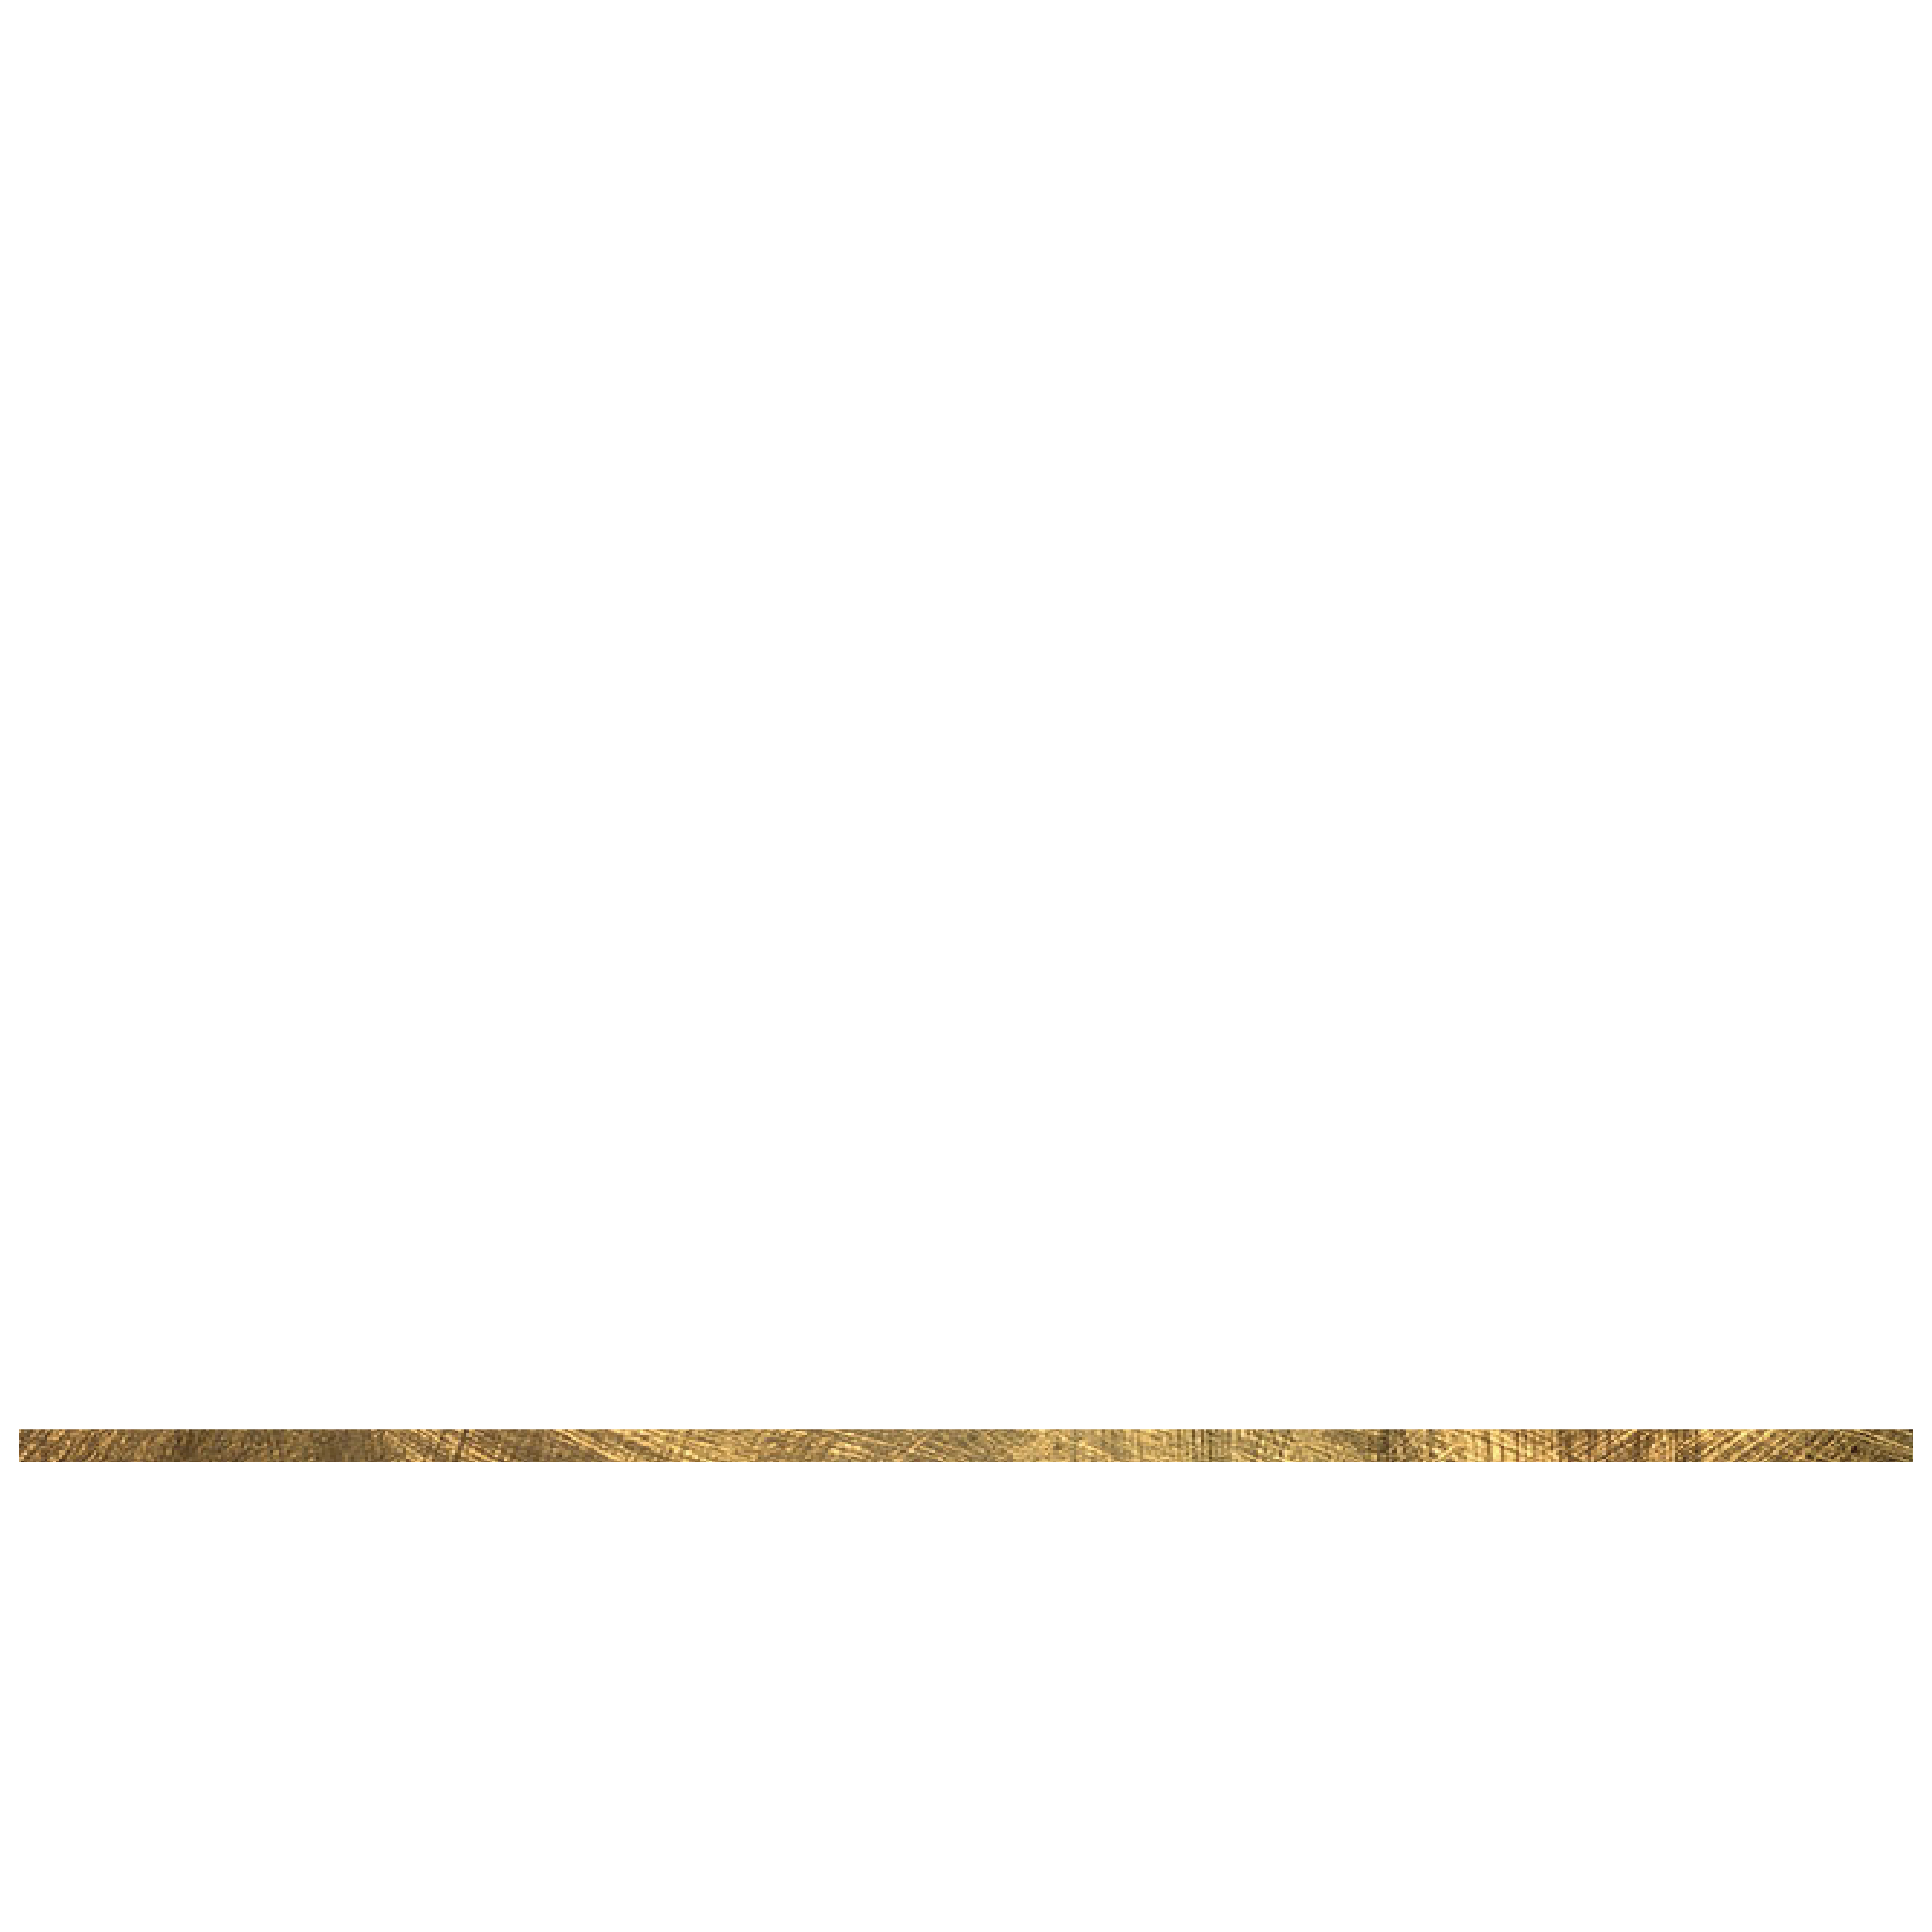 FranklinVines_1500